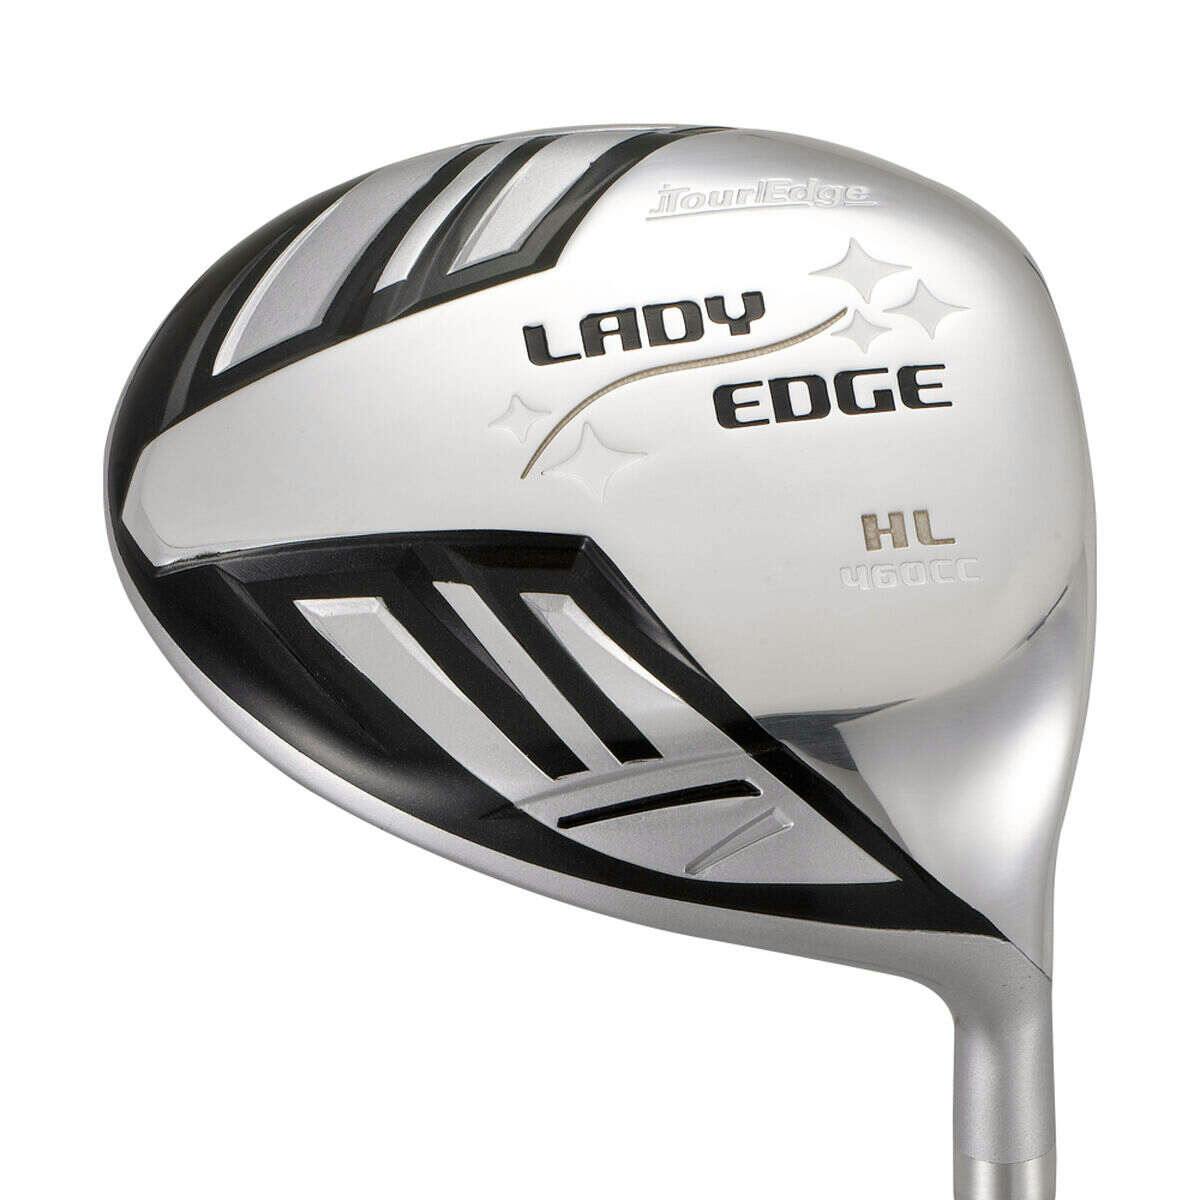 Tour Edge Lady Edge Women's Half Complete Set · Right handed · Graphite · Ladies · Petite · Black/White